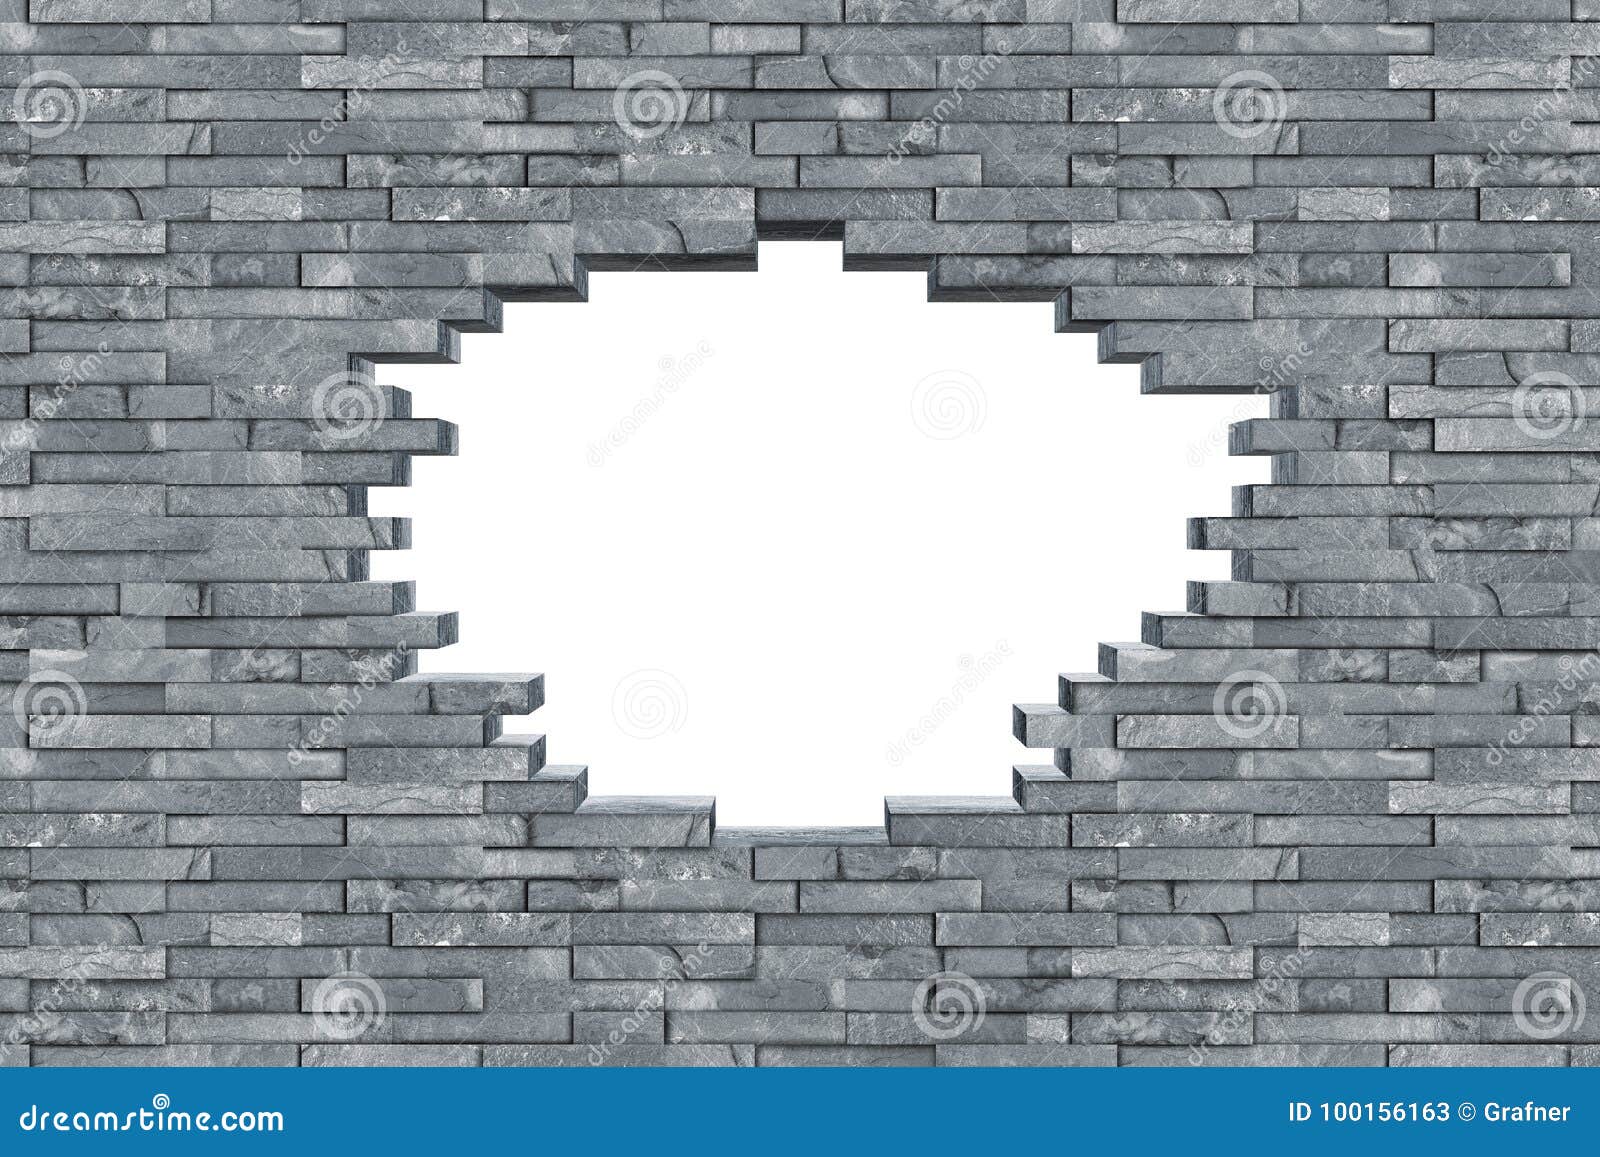 gray slate breakthrough hole wall texture